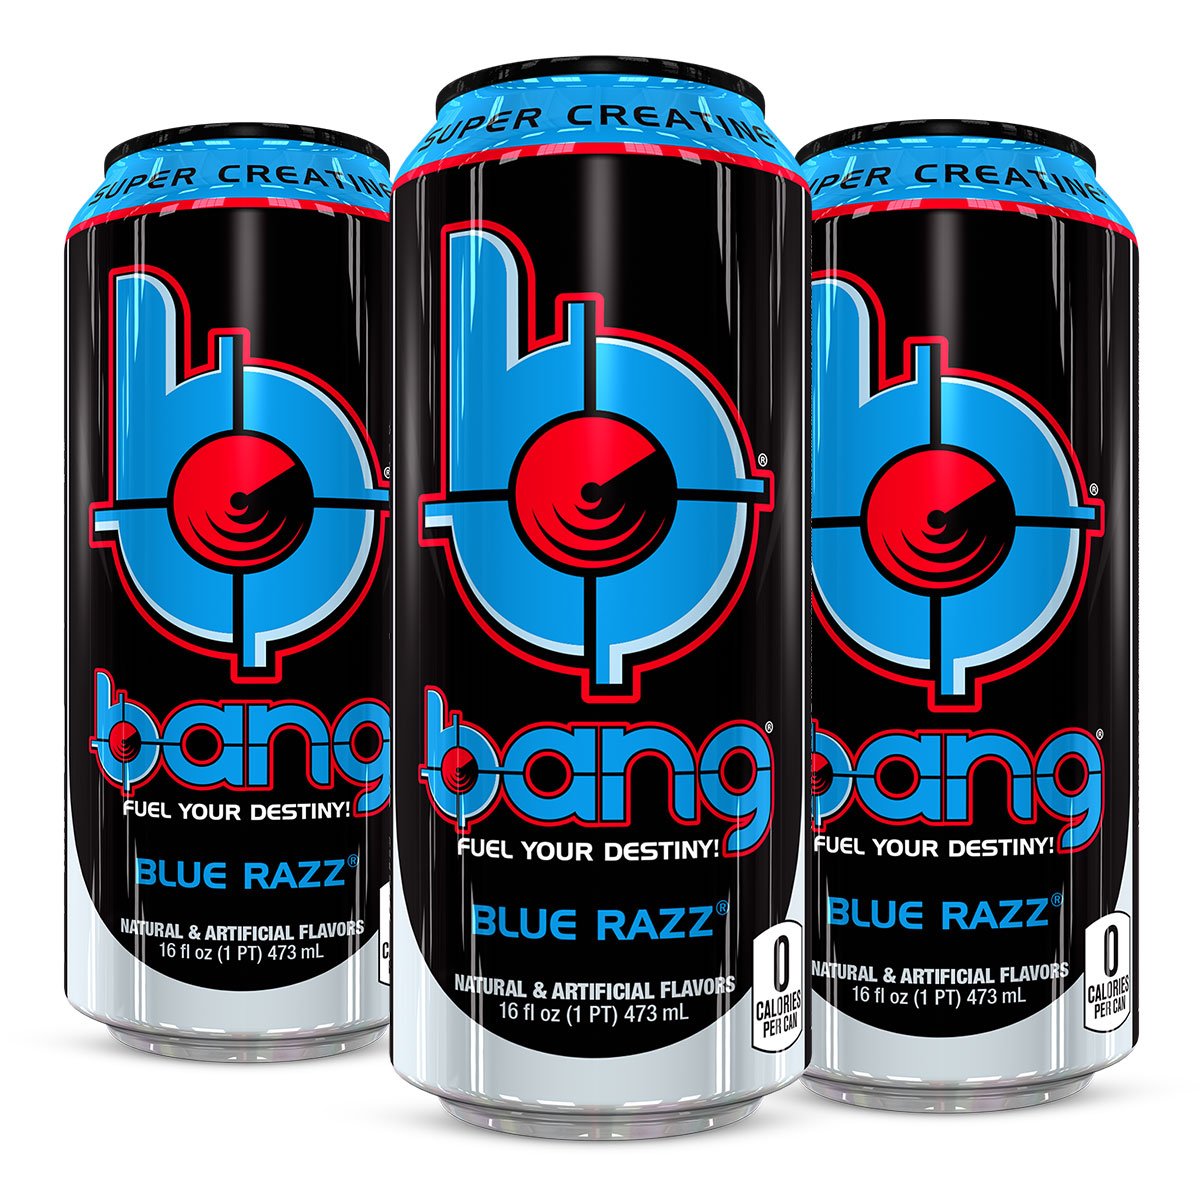 BANG Energy Drink (12 Cans) Free Shipping (Miami Cola Rainbow Unicorn) | eBay